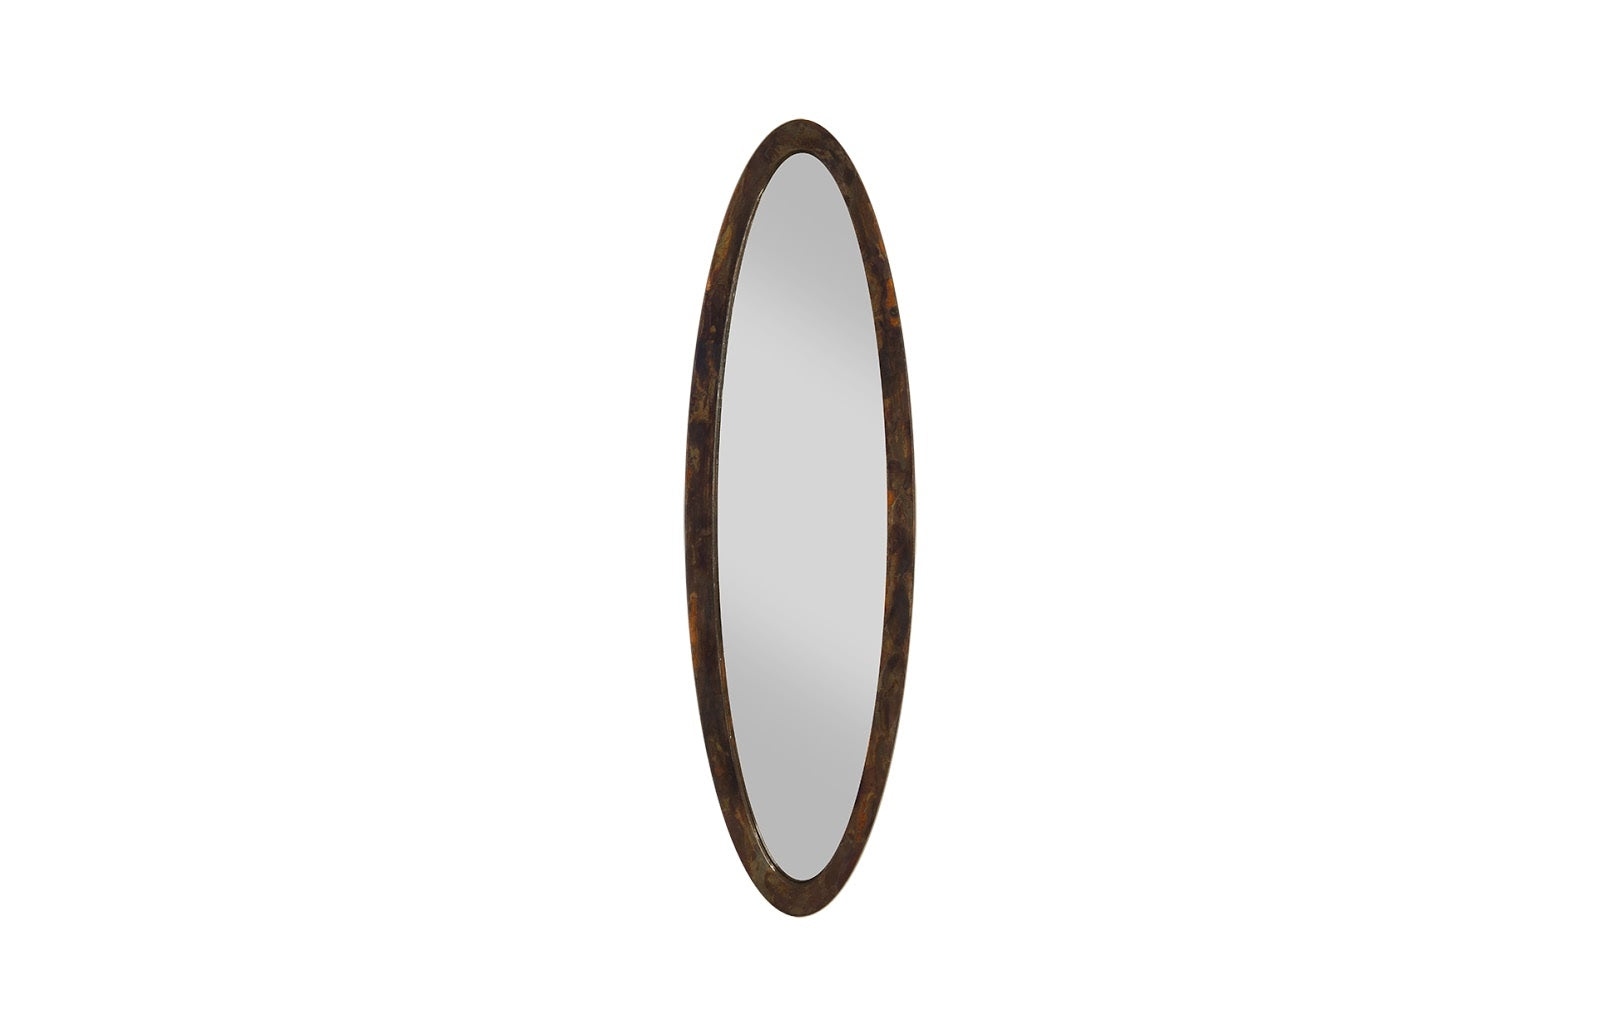 Elliptical Oval Mirror Small, Posh